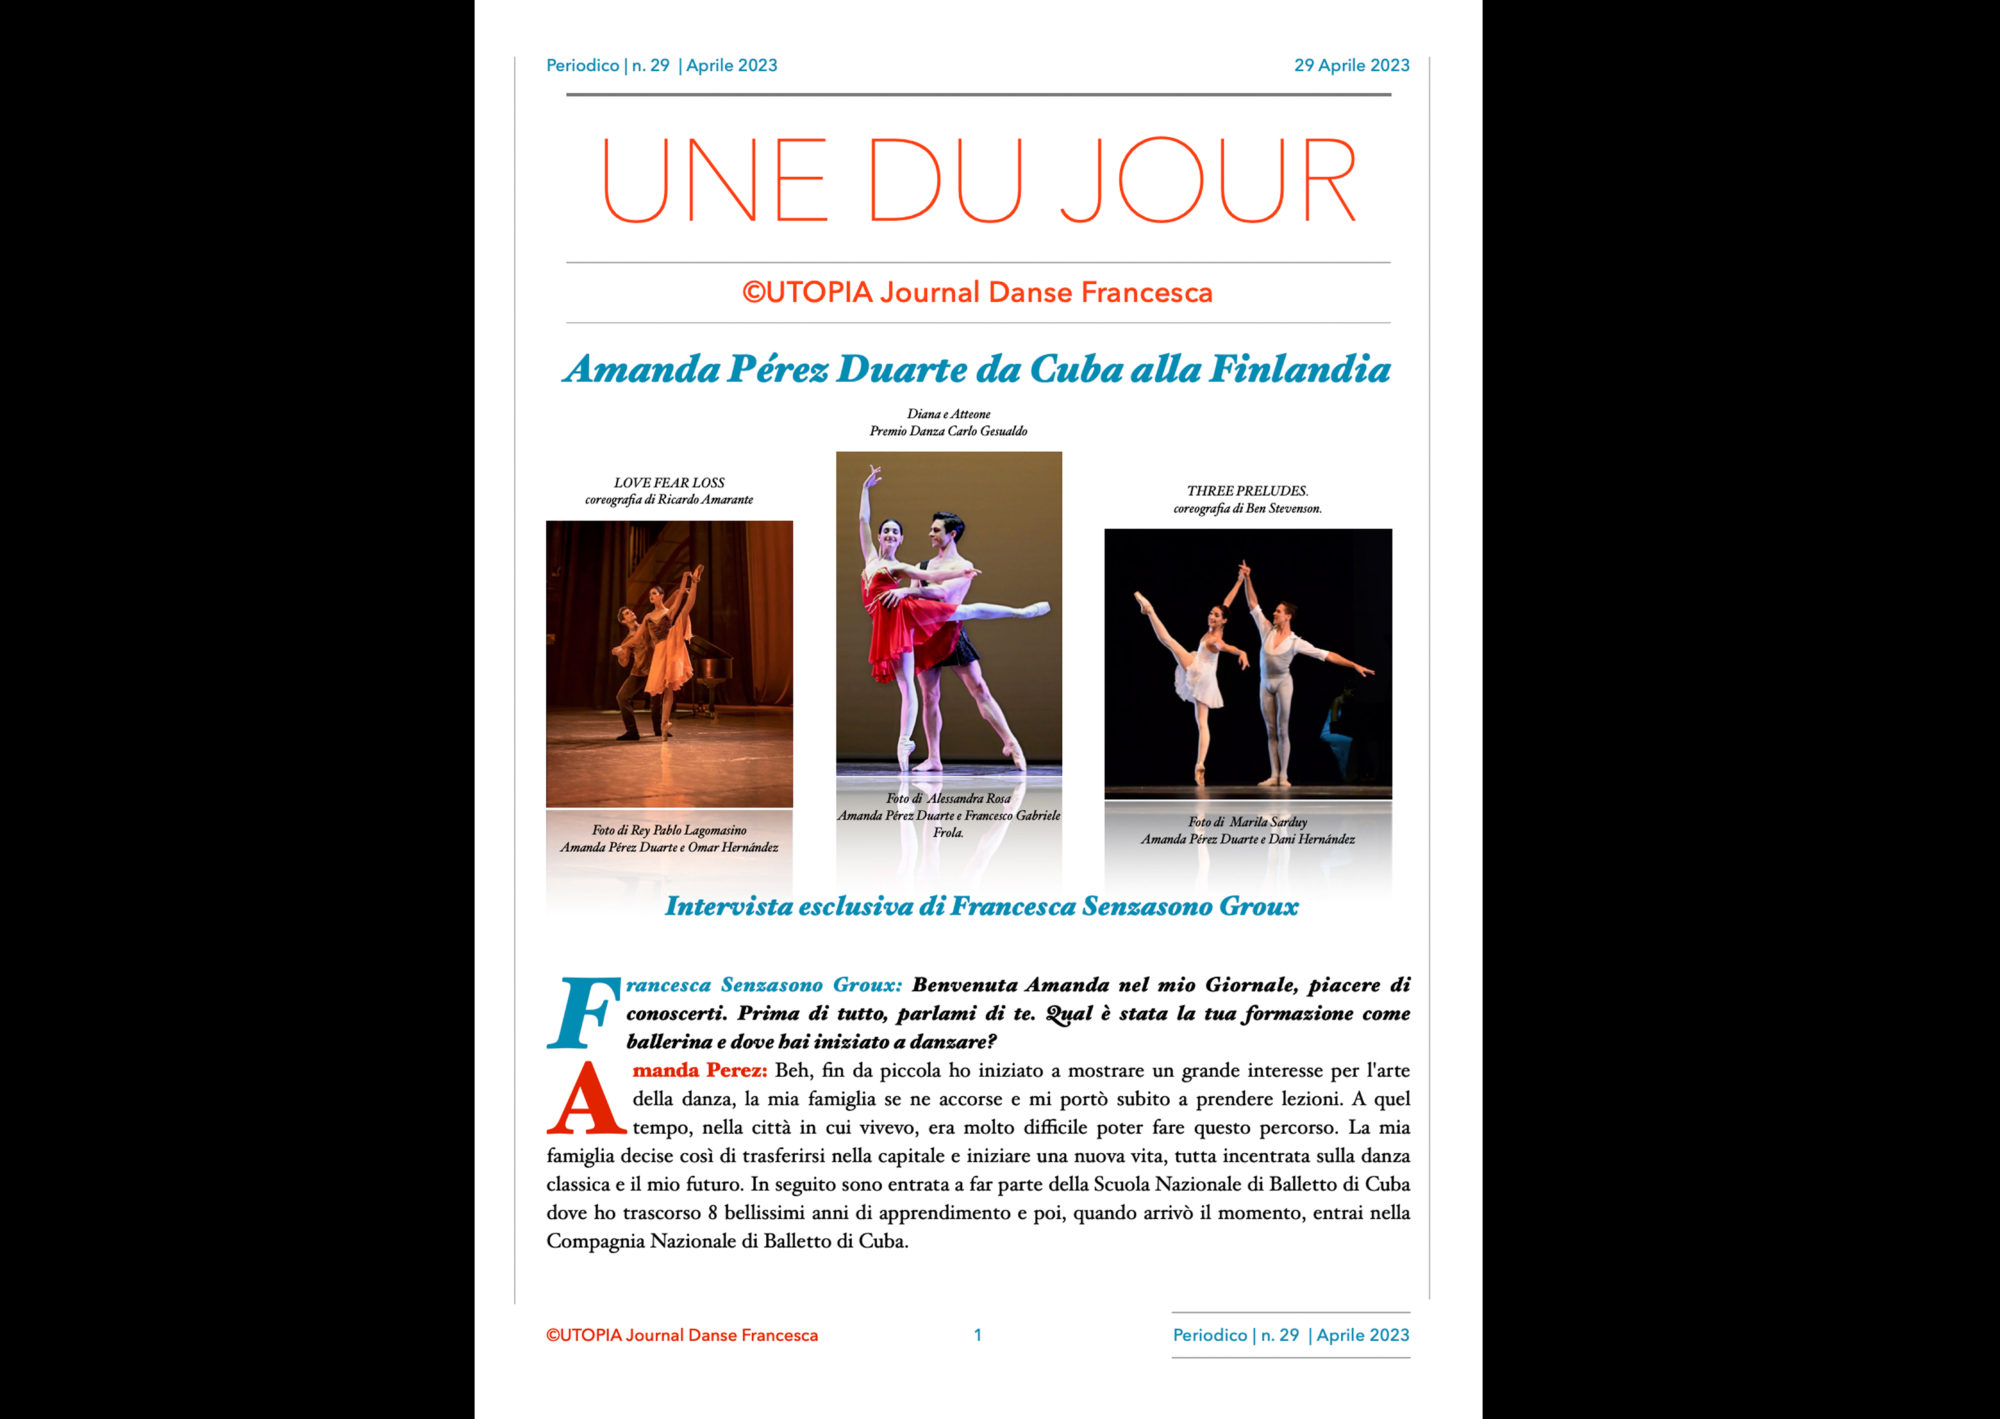 ©UTOPIA Journal Danse Francesca Periodico n.29 29 Aprile 2023 pagina 1